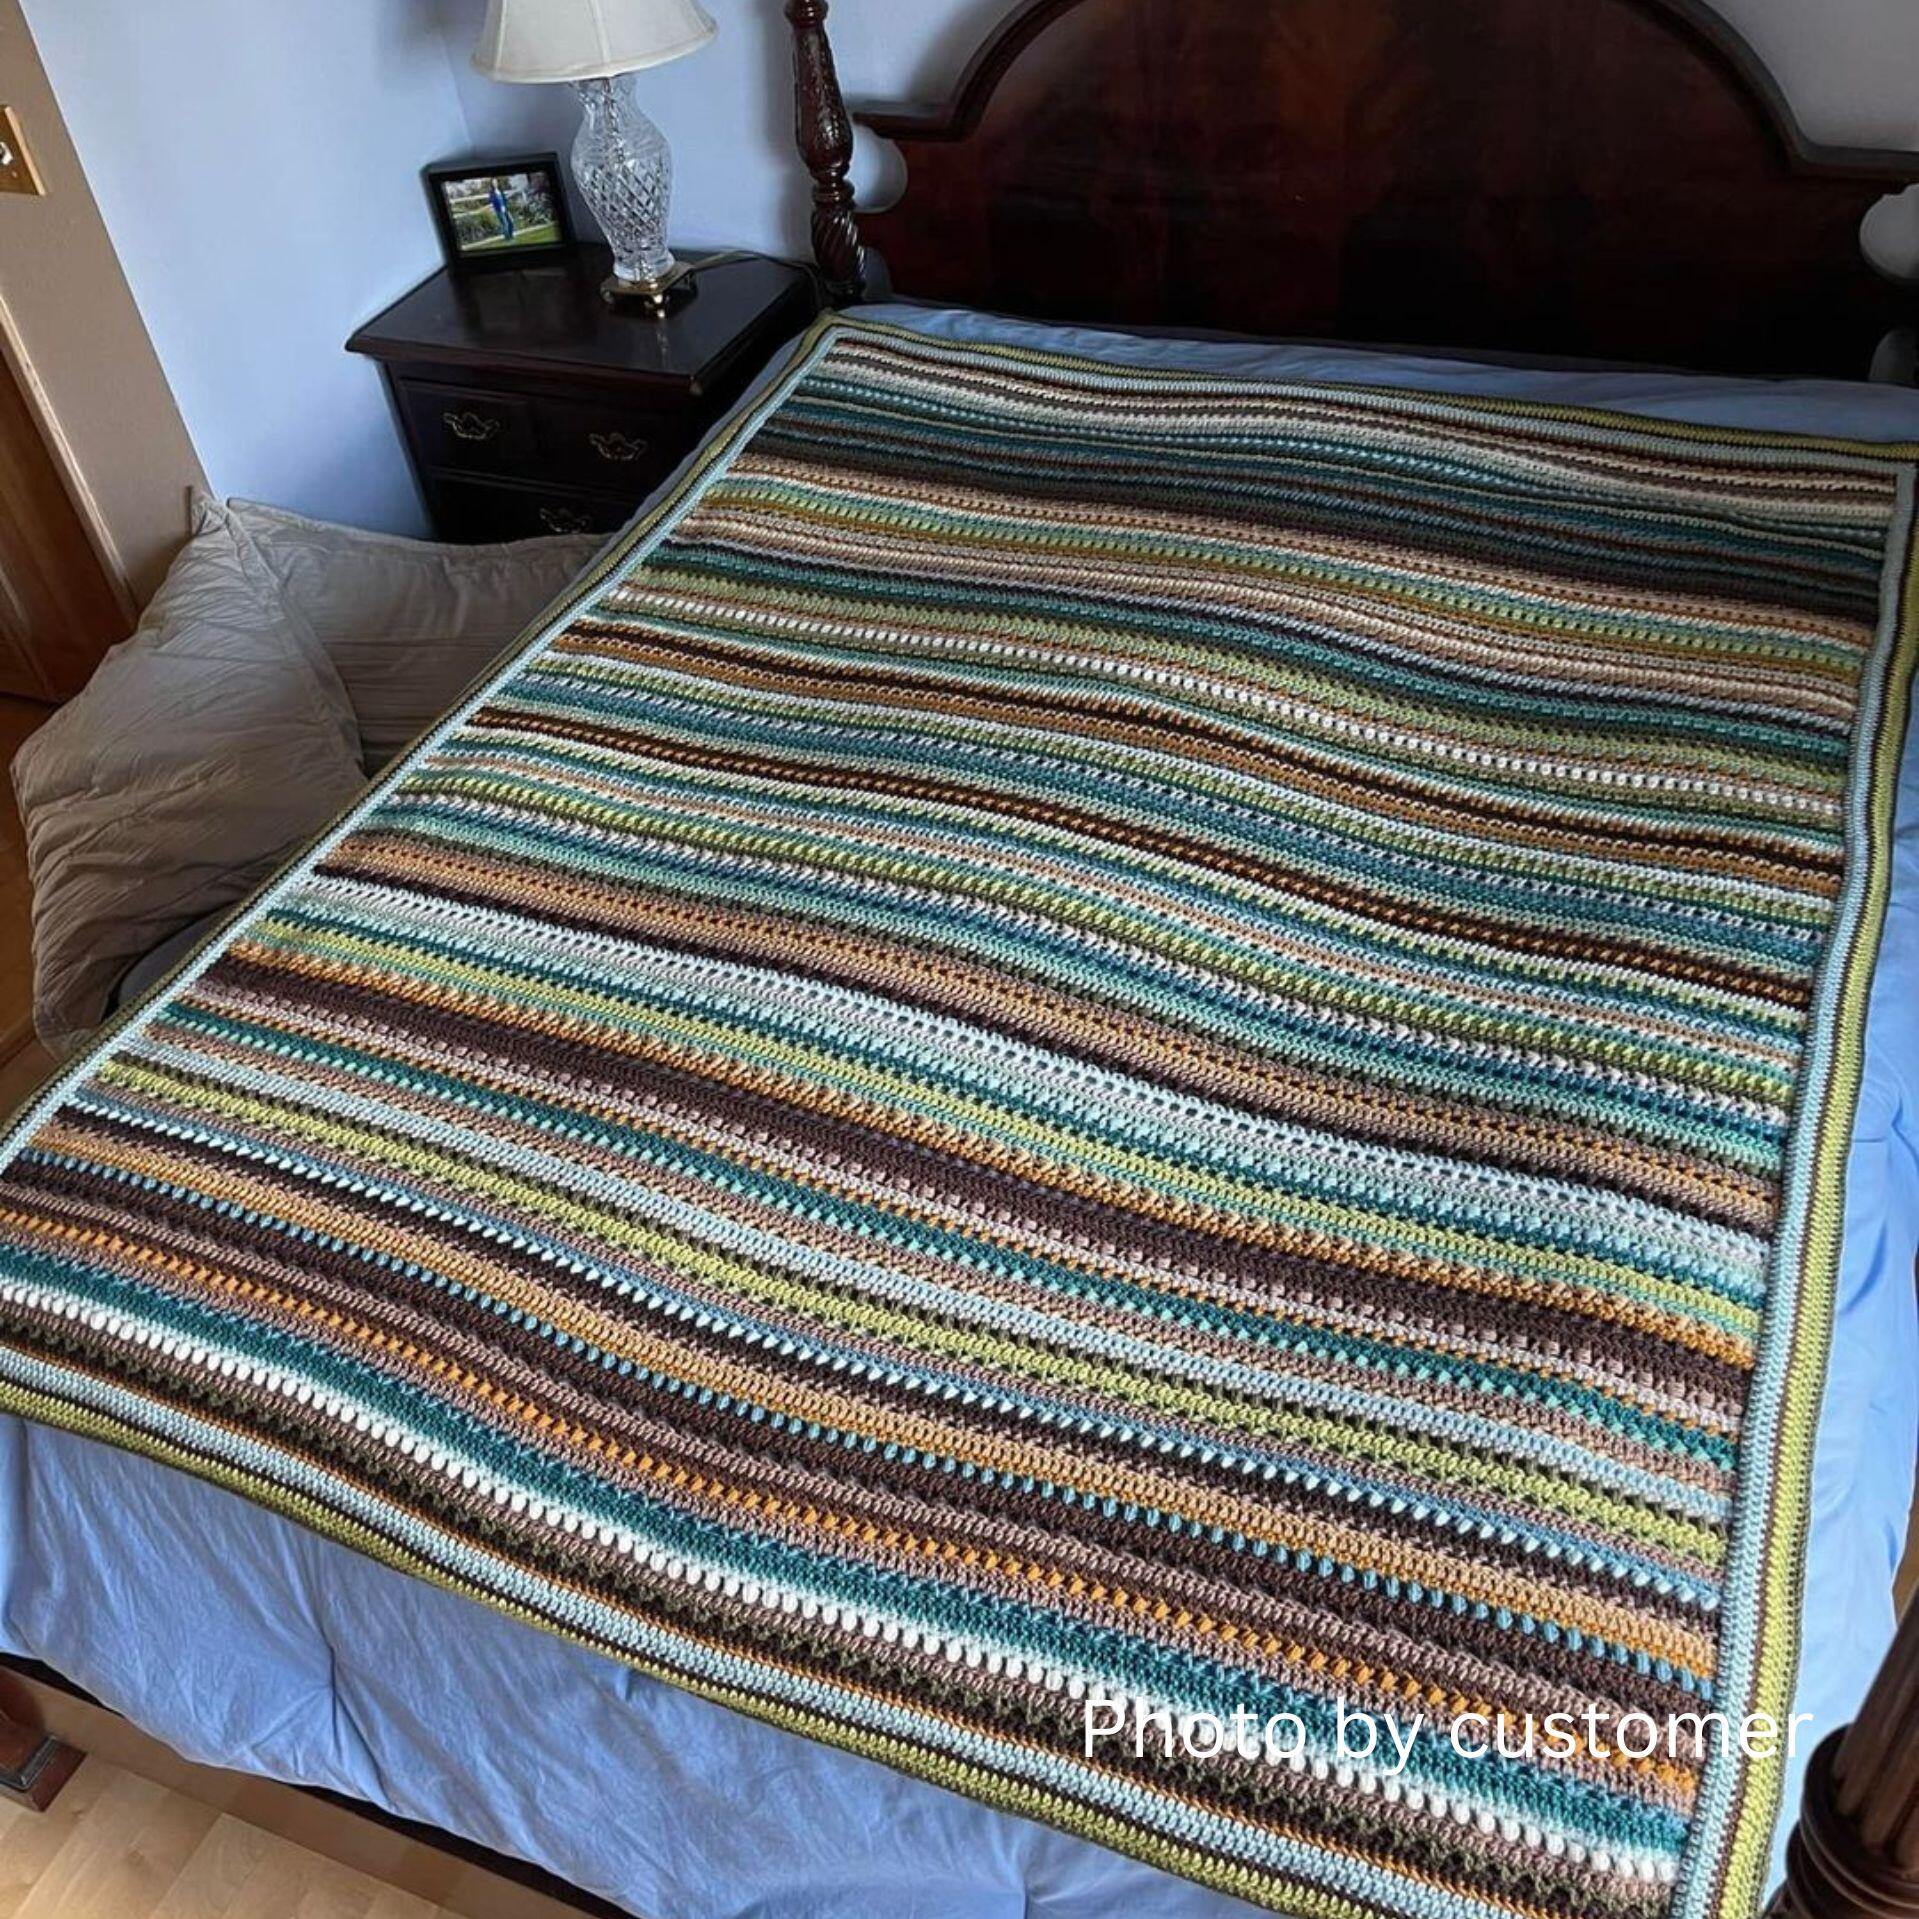 Lizzie blanket by customer